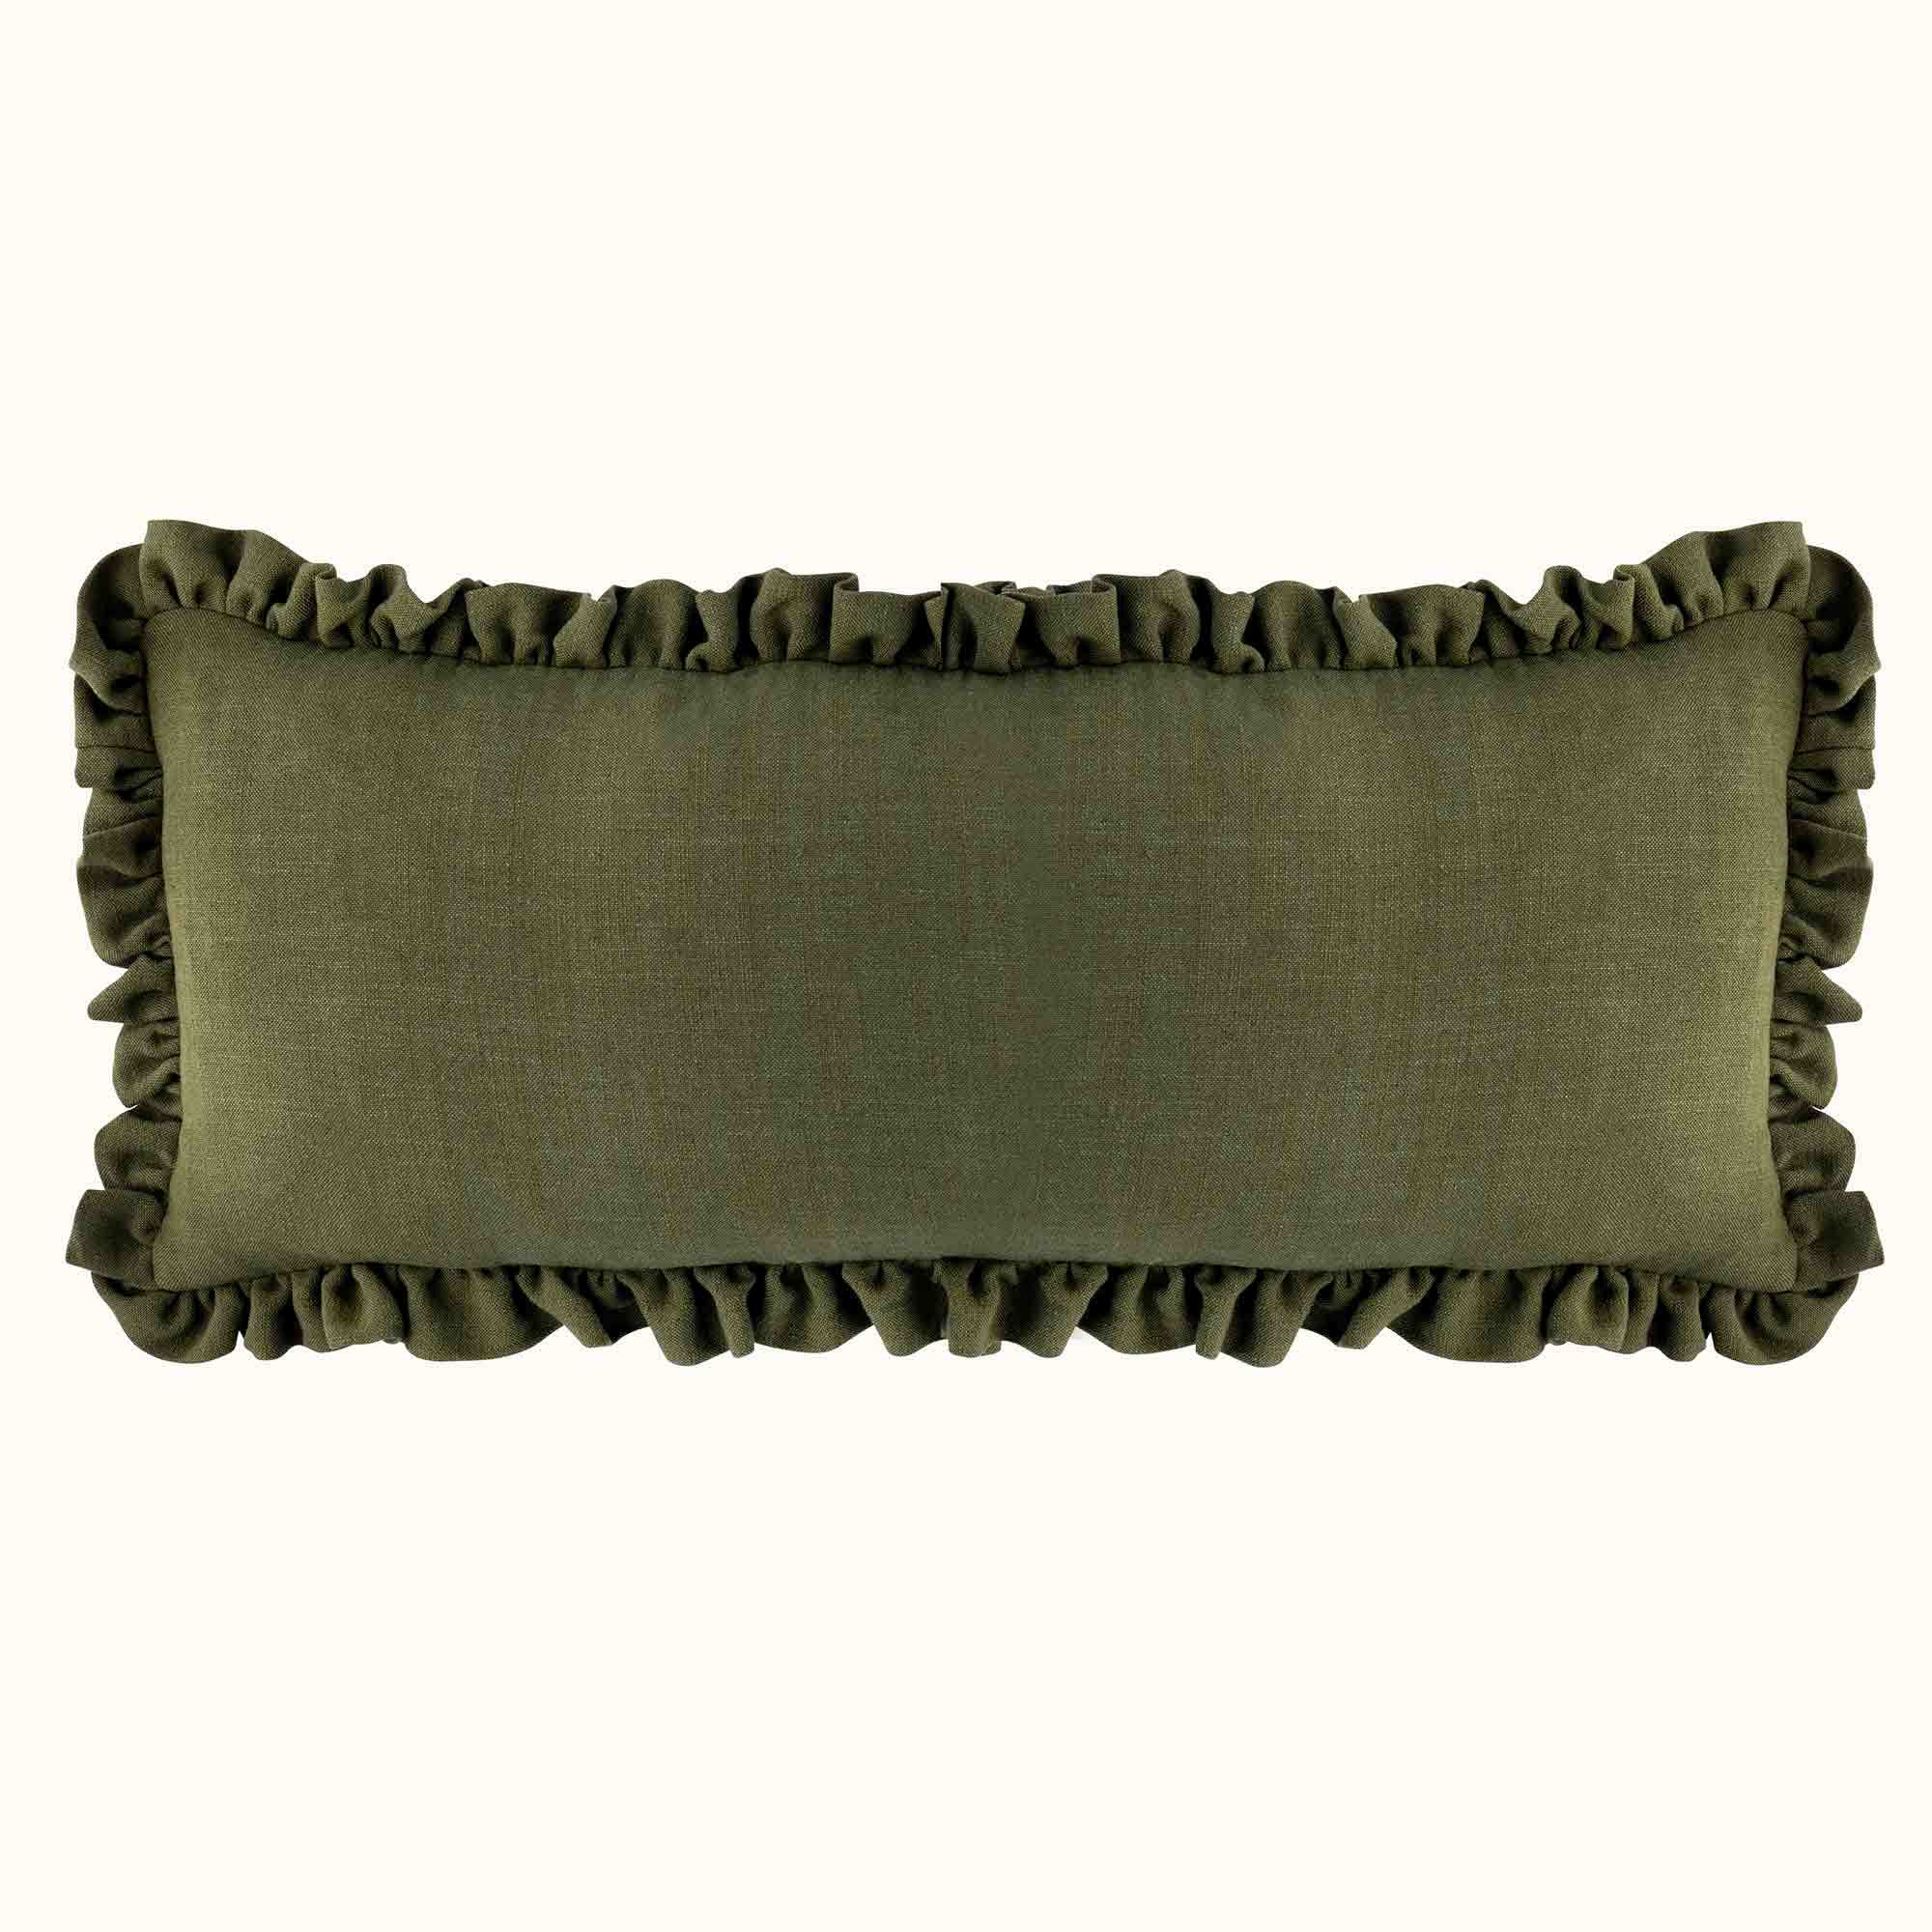 40cm x 80cm Rectangle Cushion with Ruffles